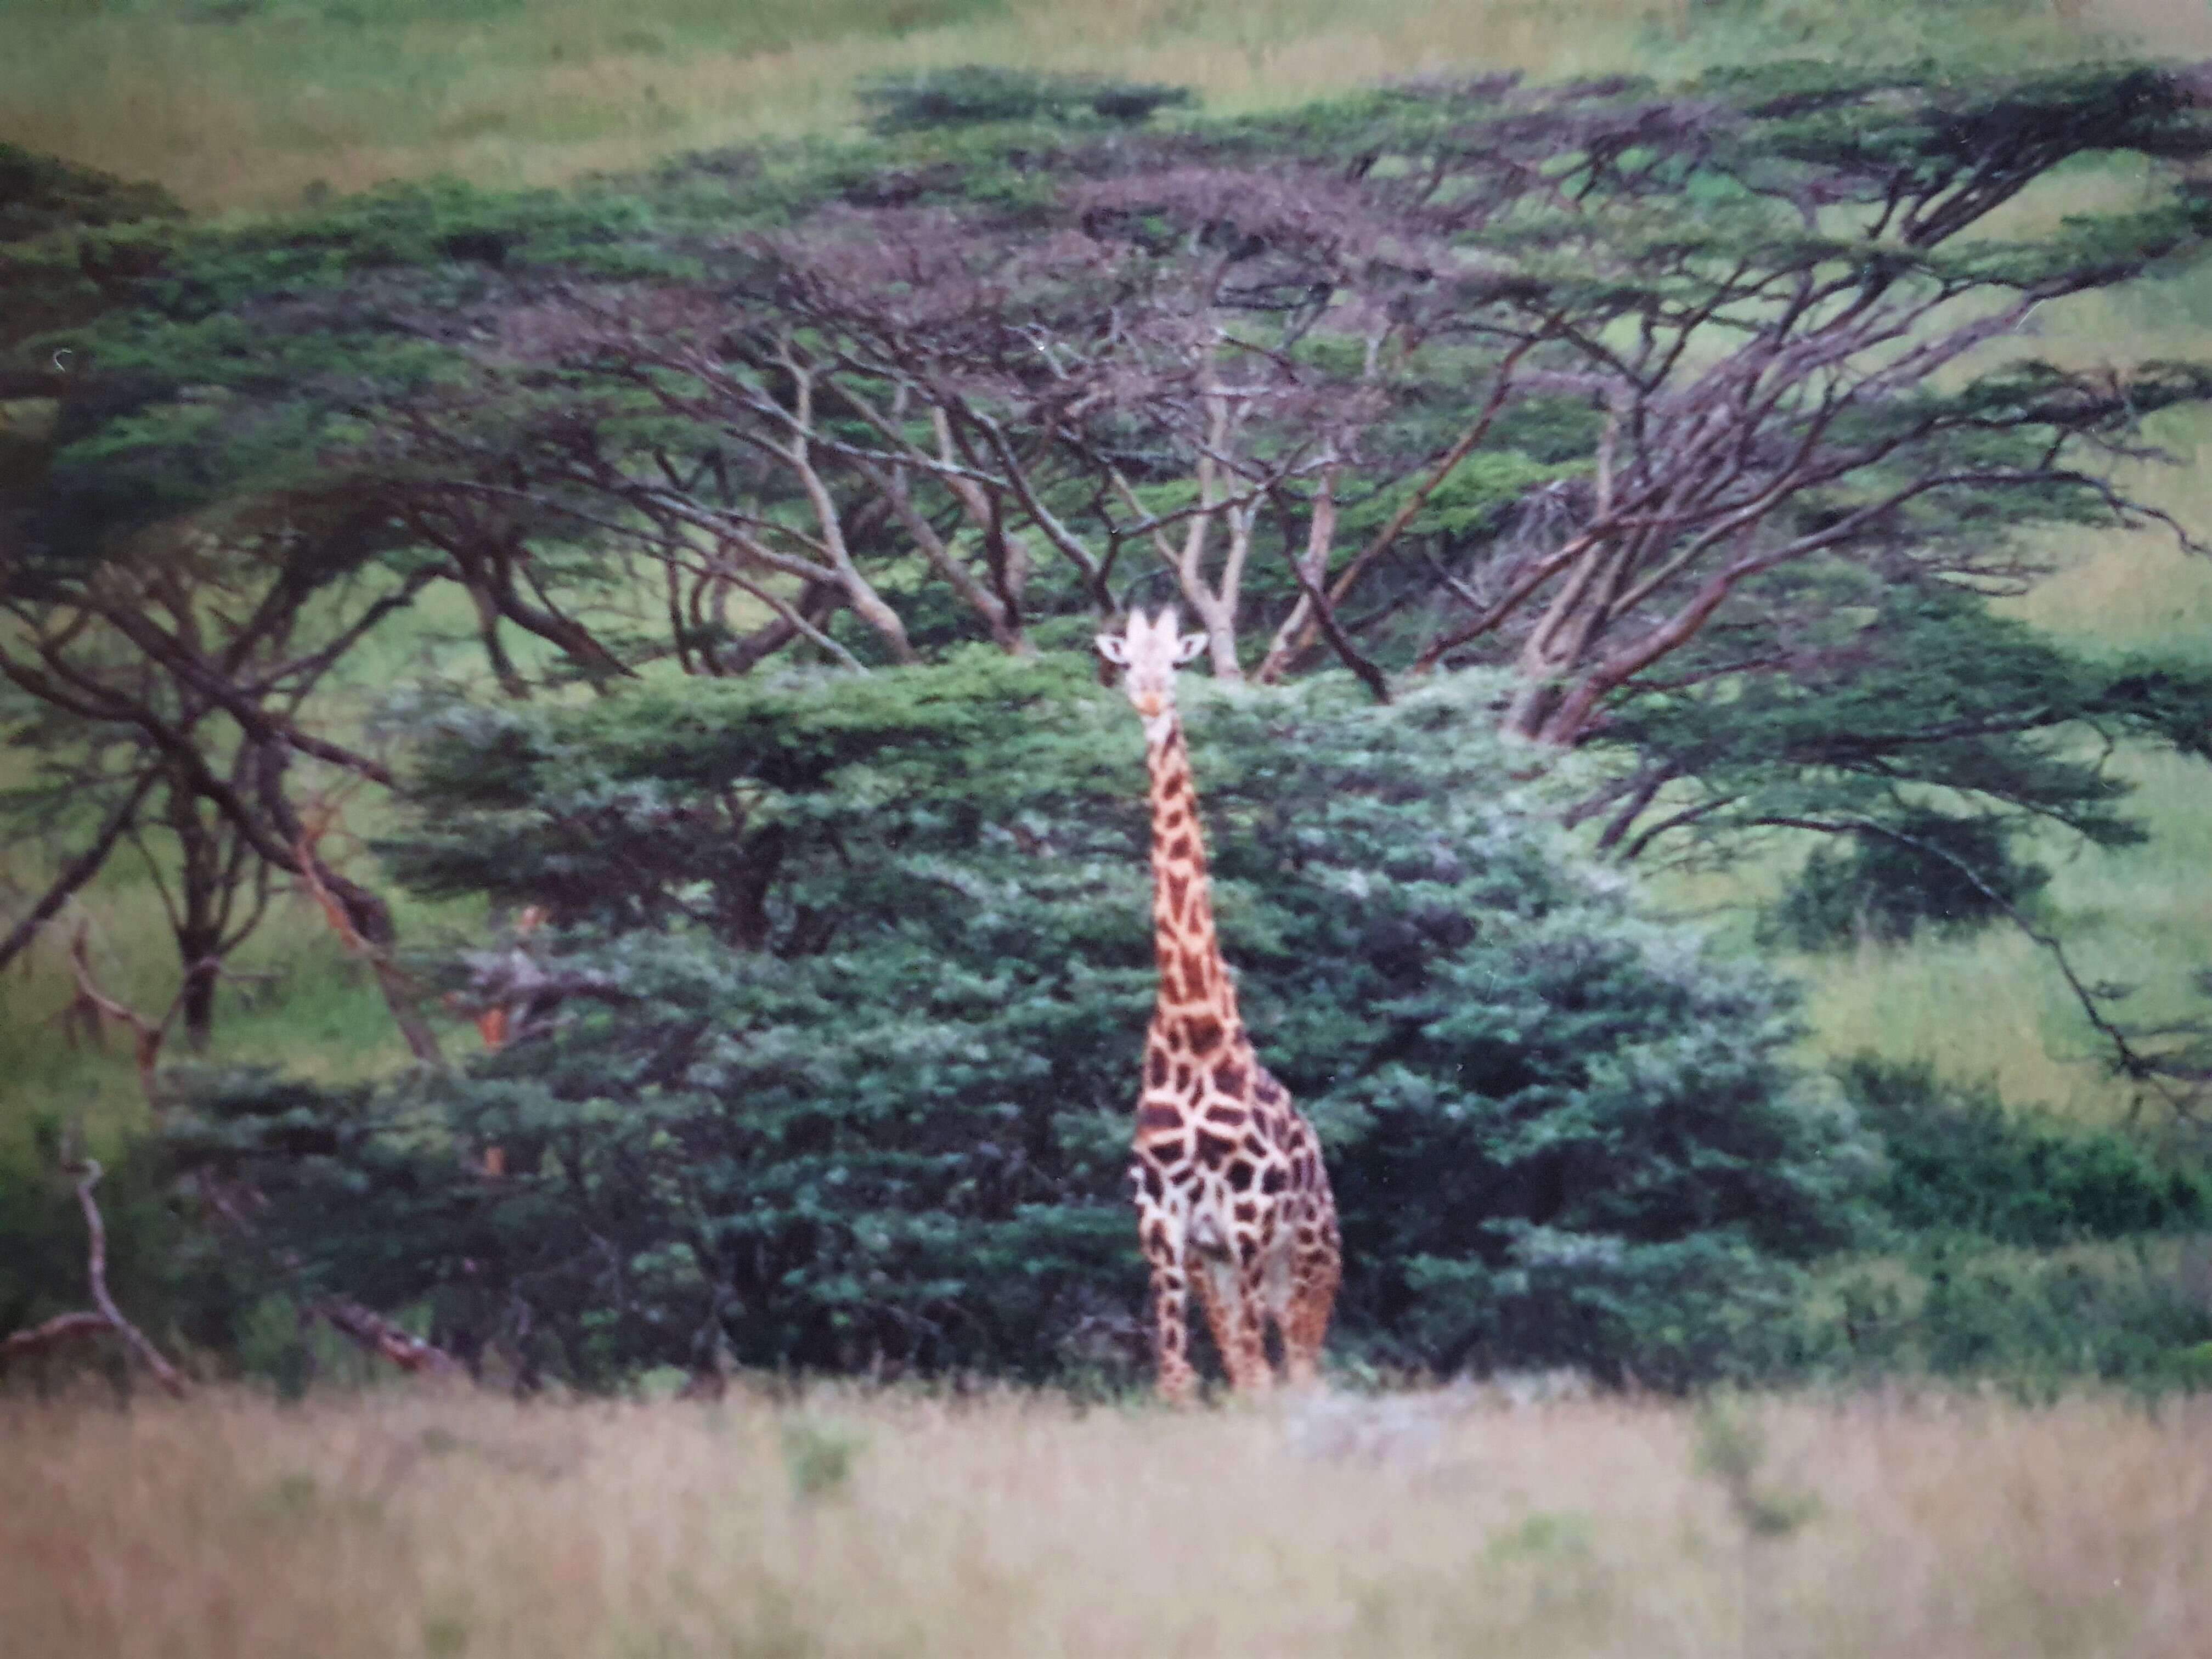 Image of Giraffa